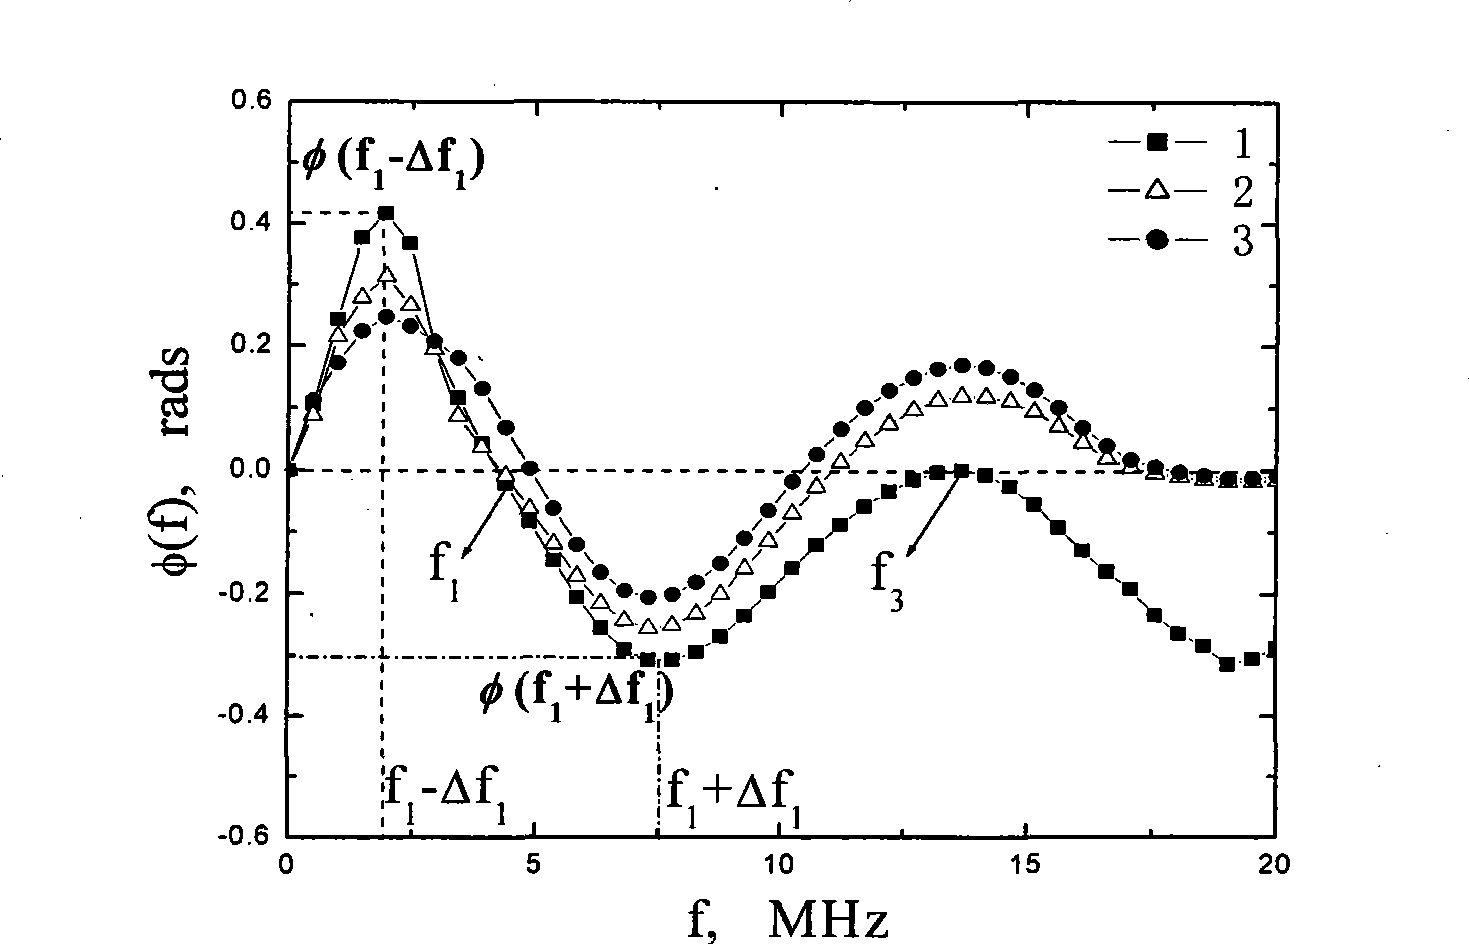 Coating density ultrasonic measurement method based on pressure reflection coefficient phase spectrum